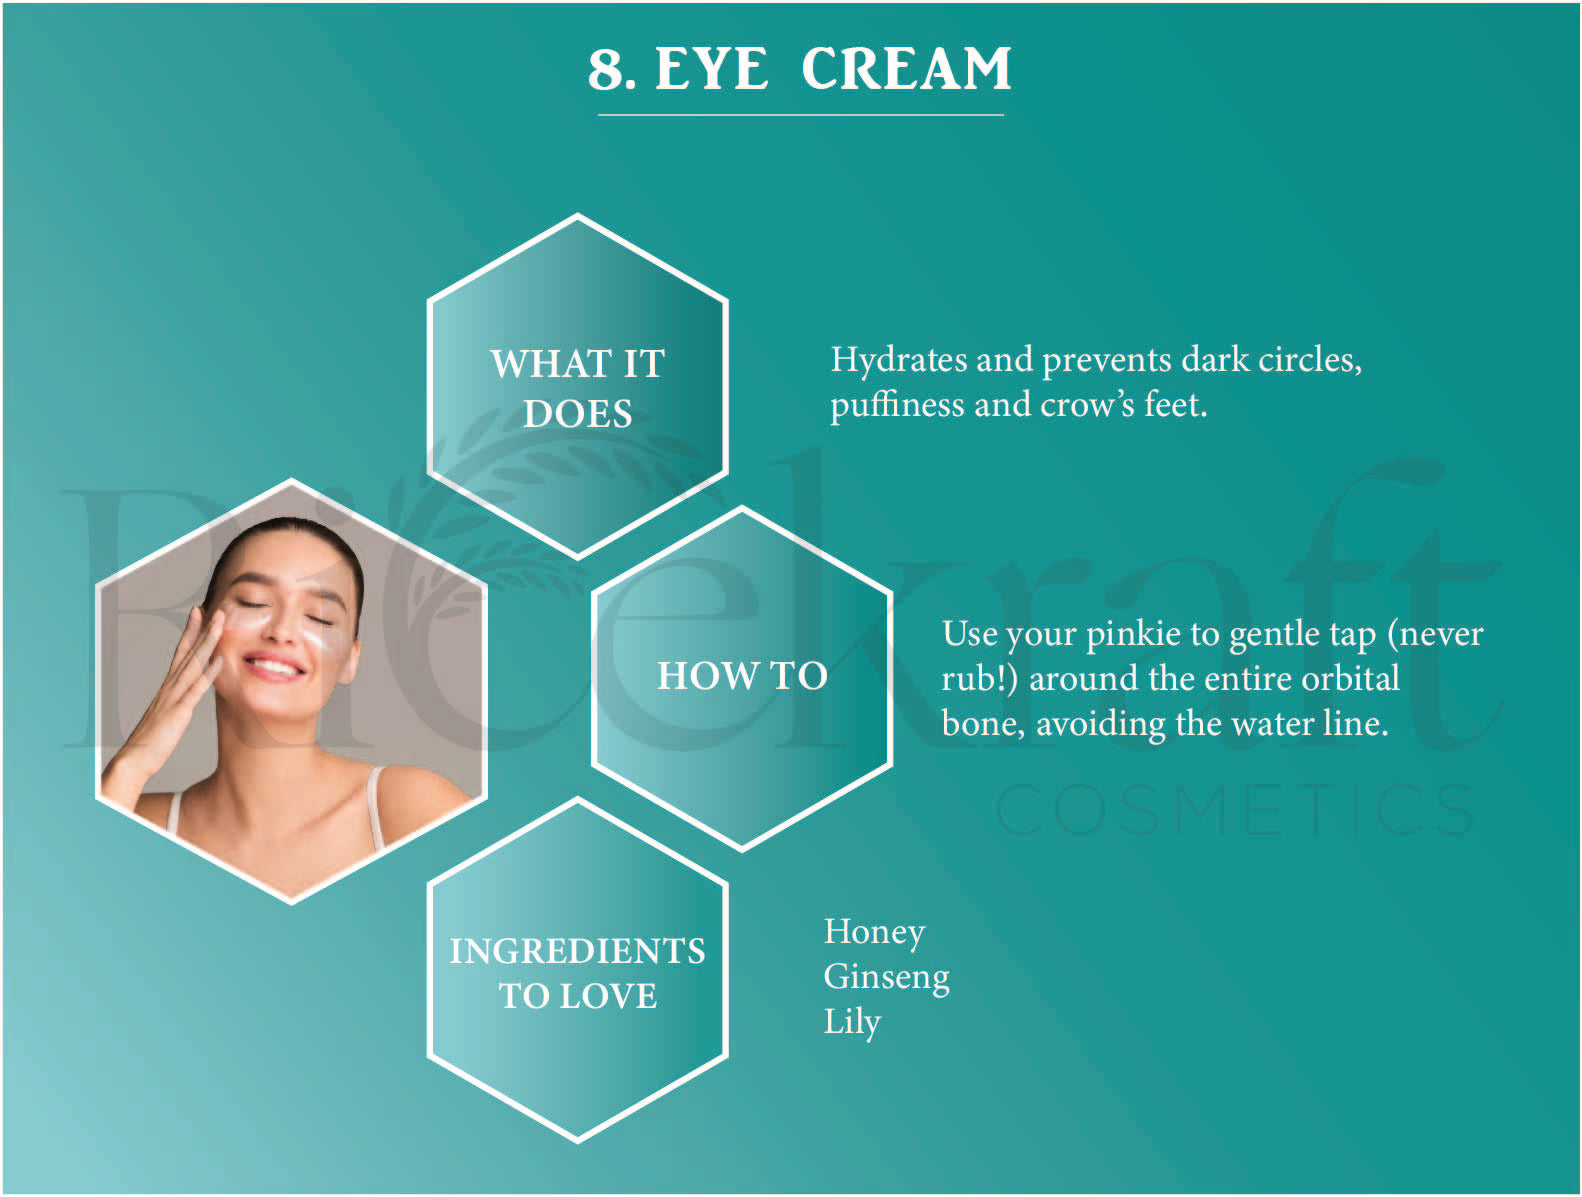 "Eye Cream: Hydration, Dark Circle Prevention, and More. Apply gently around the orbital bone."